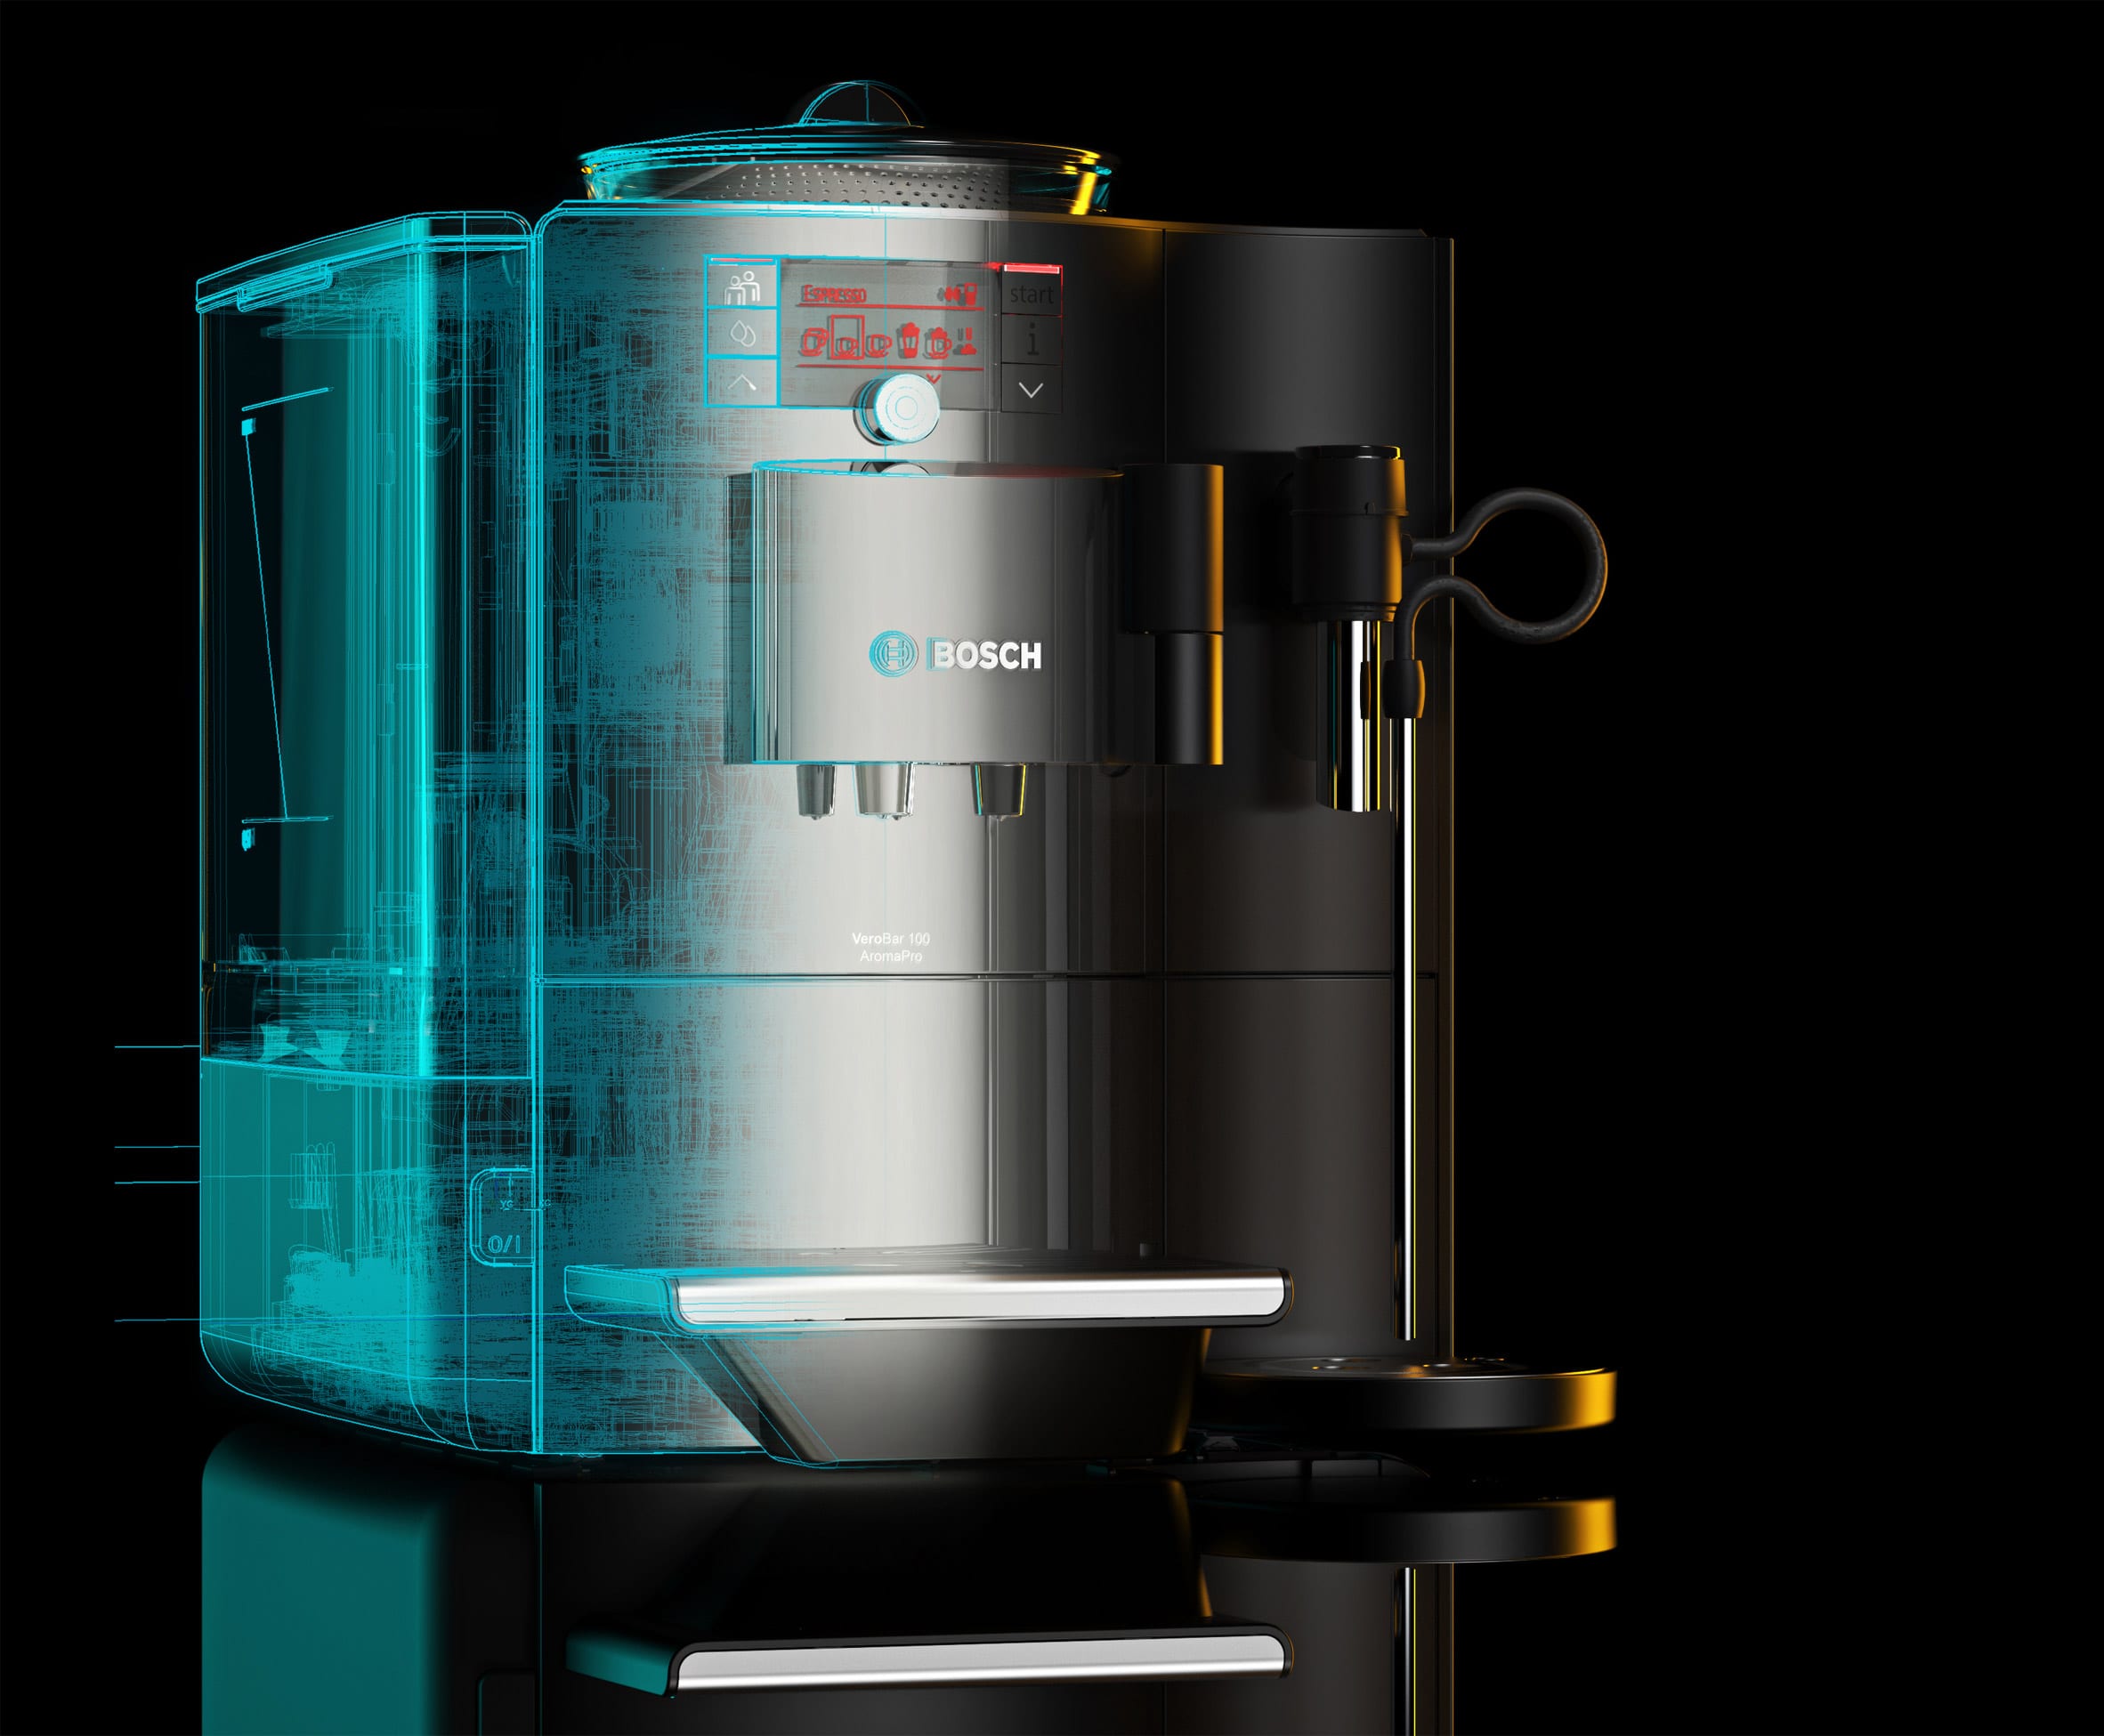 A wireframe render of a Bosch coffee machine